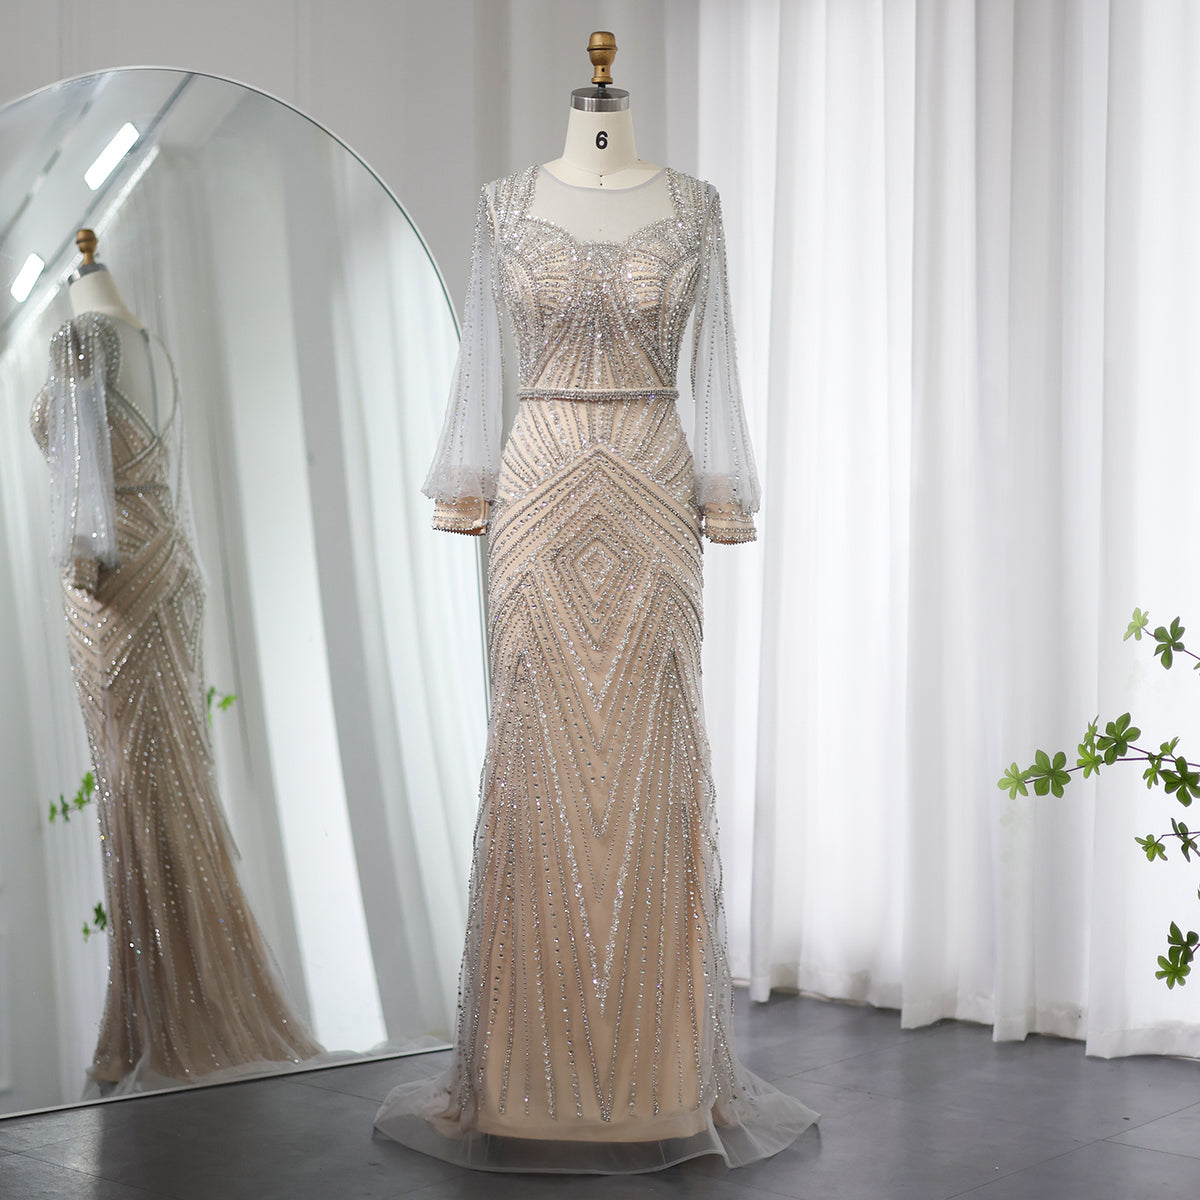 Sharon Said Luxury Silver Nude Mermaid Arabic Evening Dress Elegant Long Sleeves Dubai Women Wedding Formal Party Gowns SS020